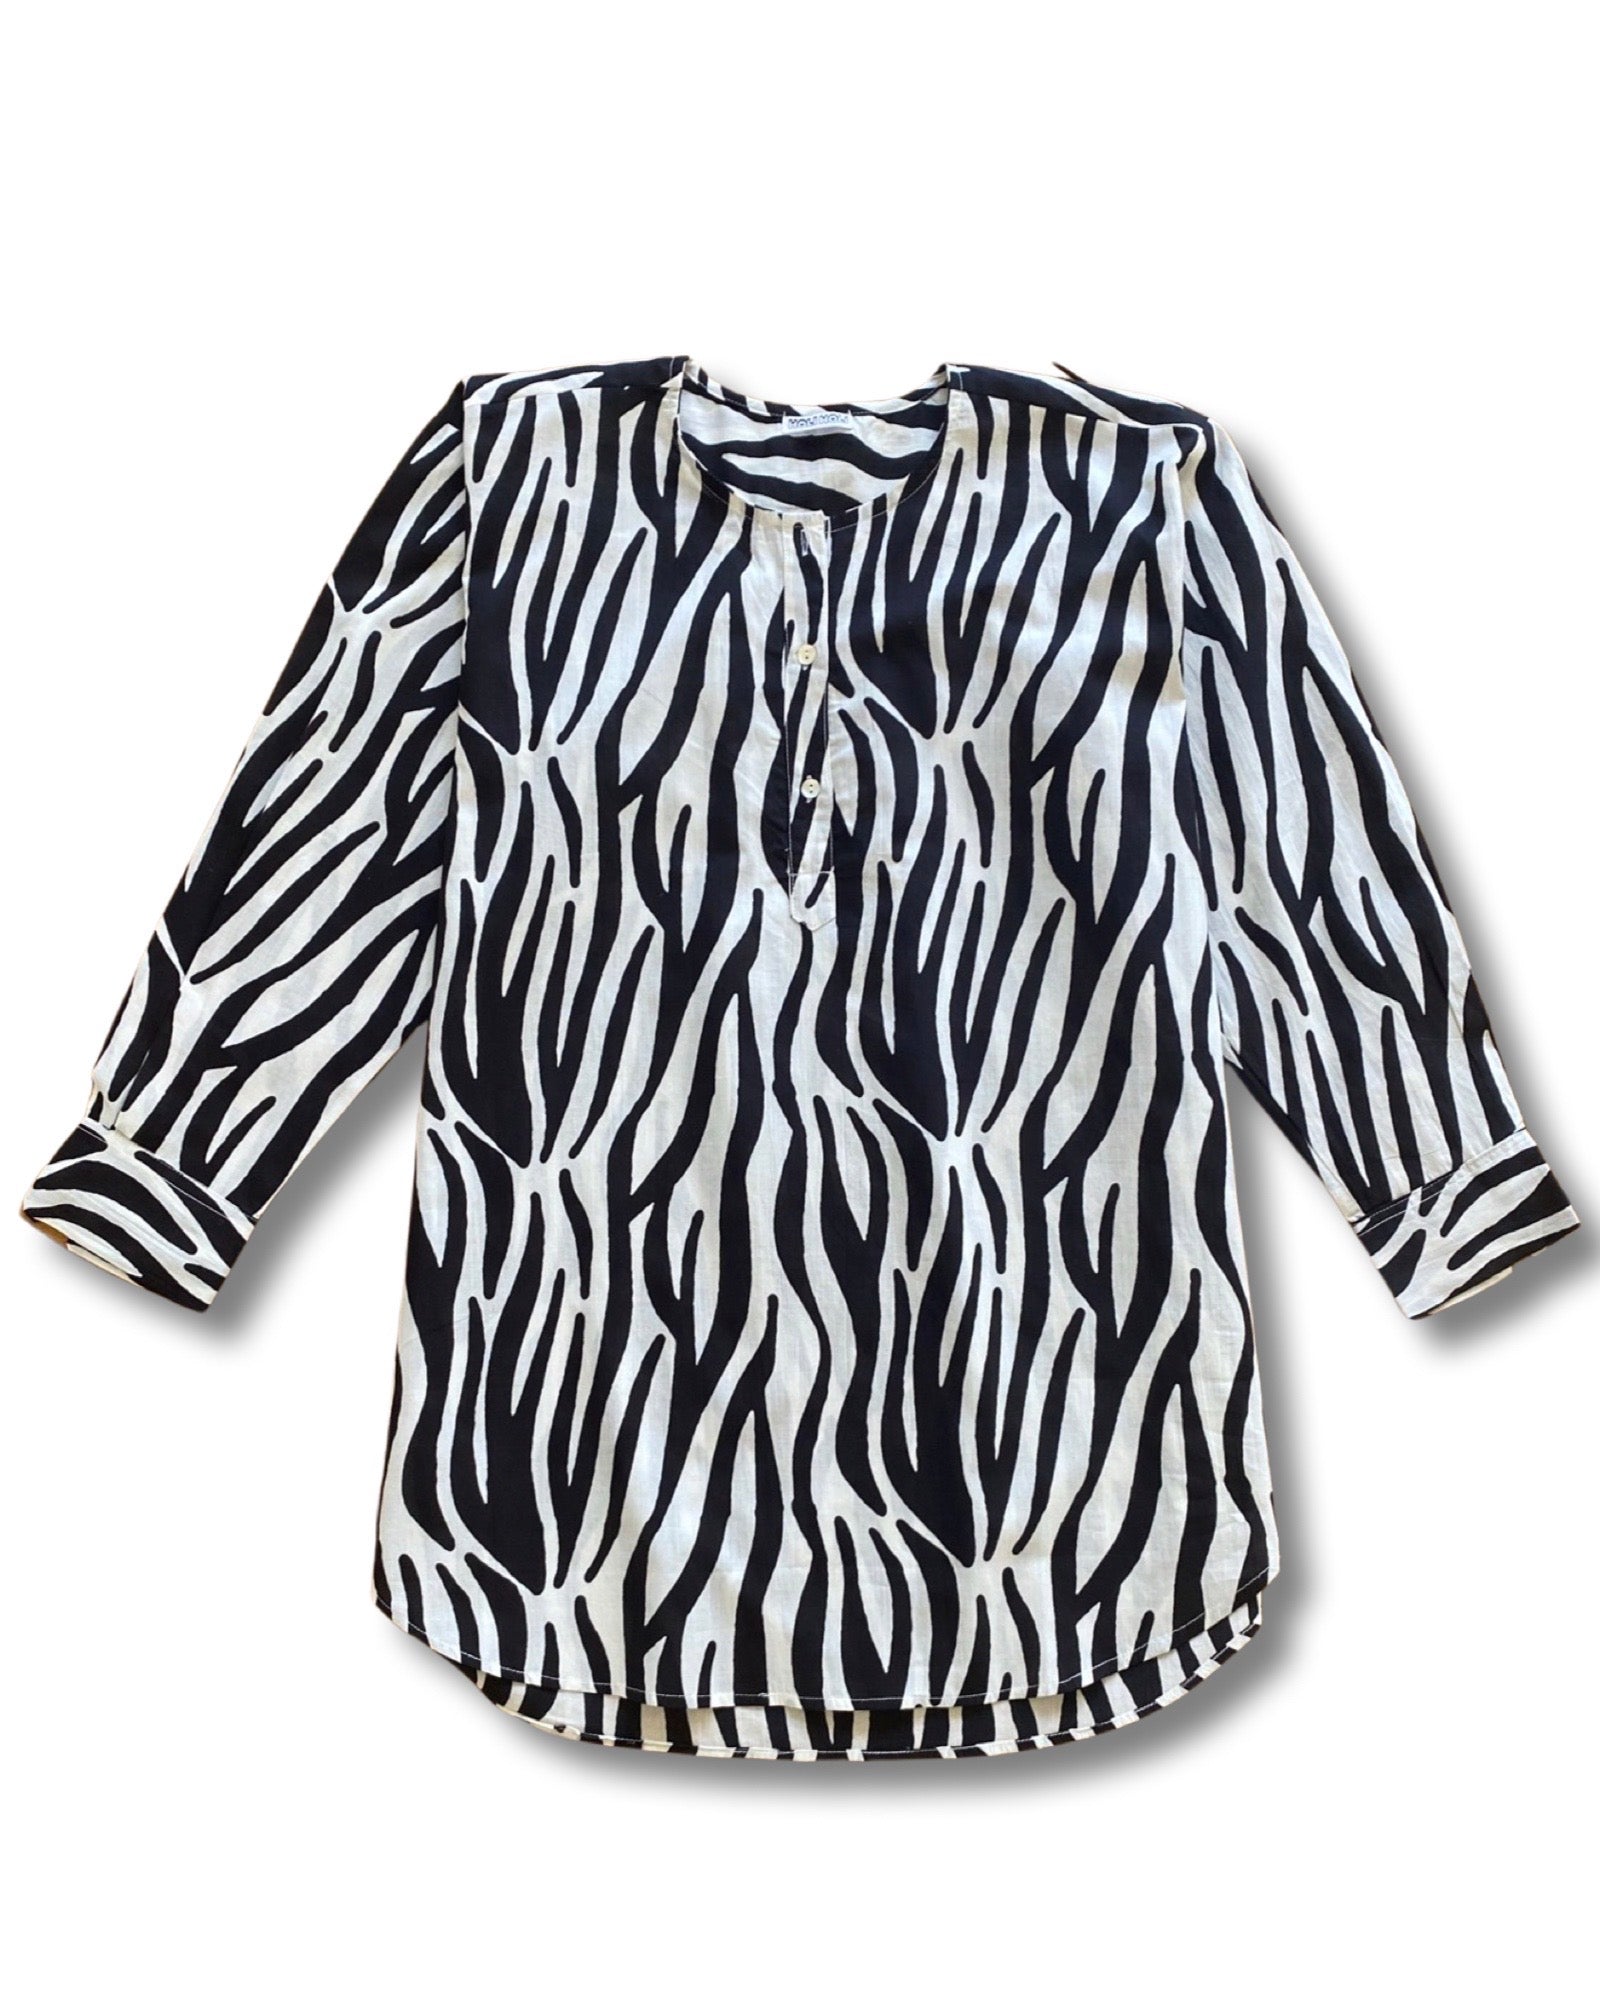 Zebra nightgown